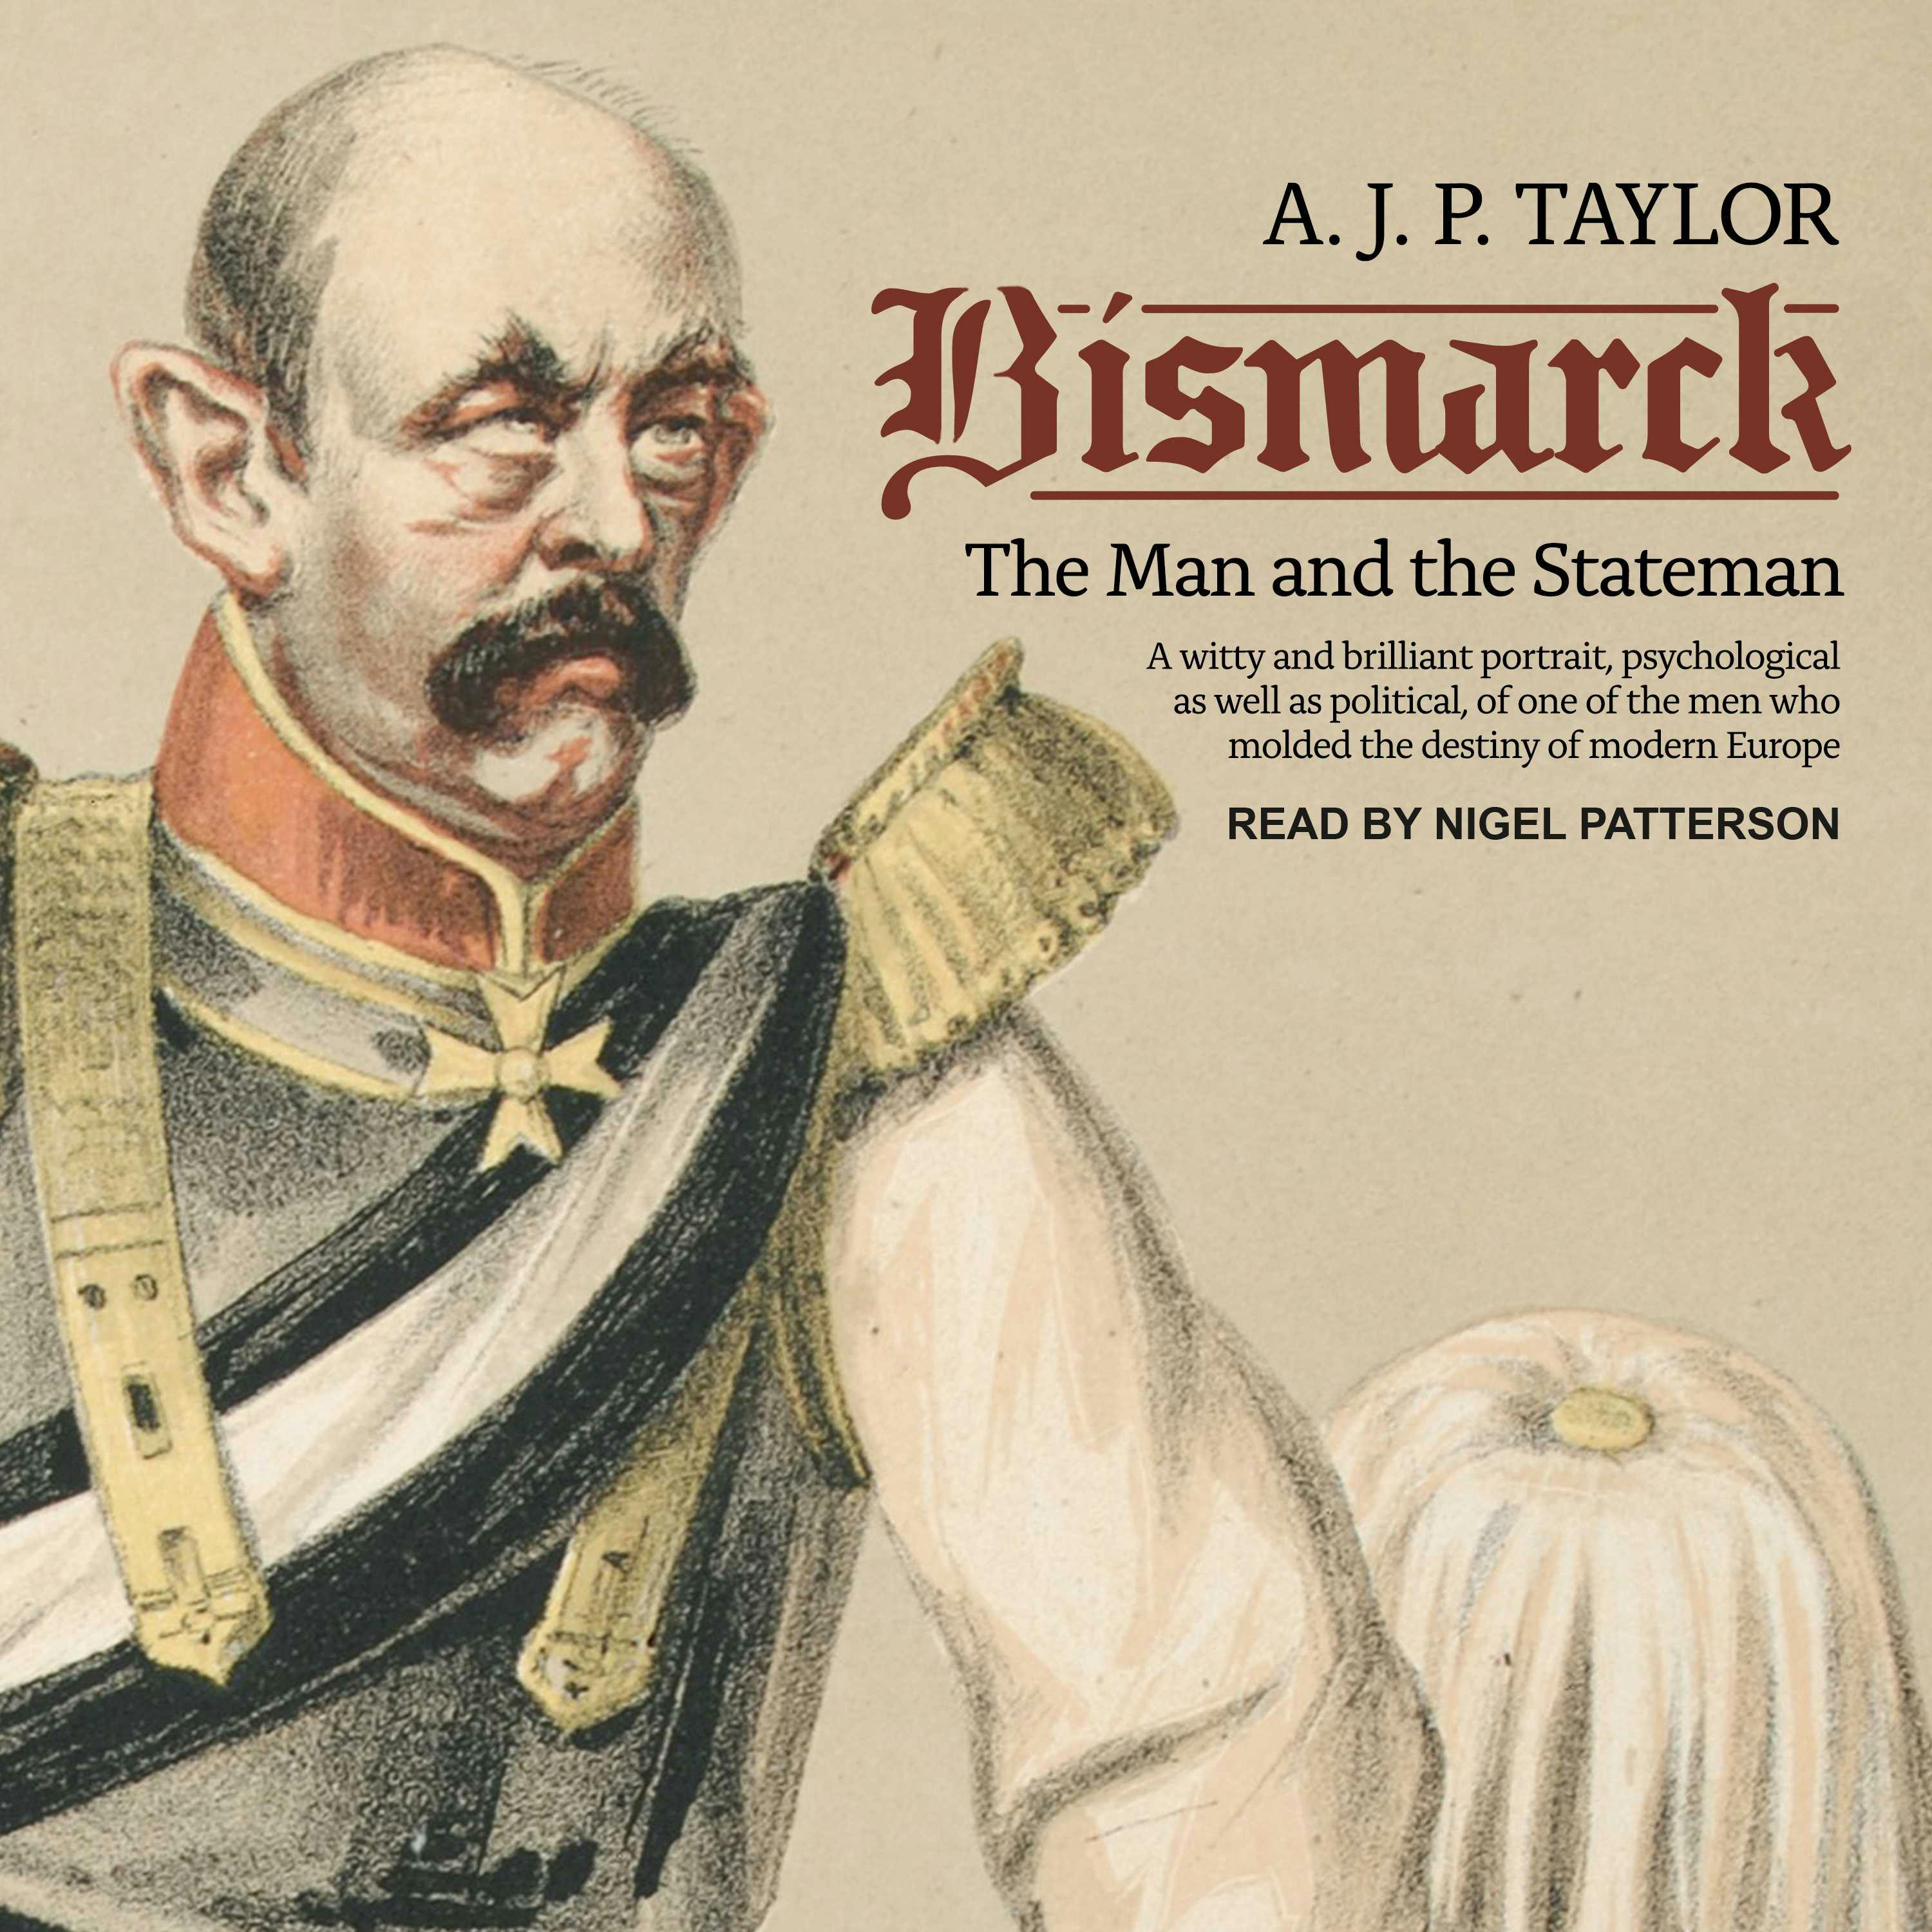 Bismarck: The Man and the Statesman - A.J.P. Taylor